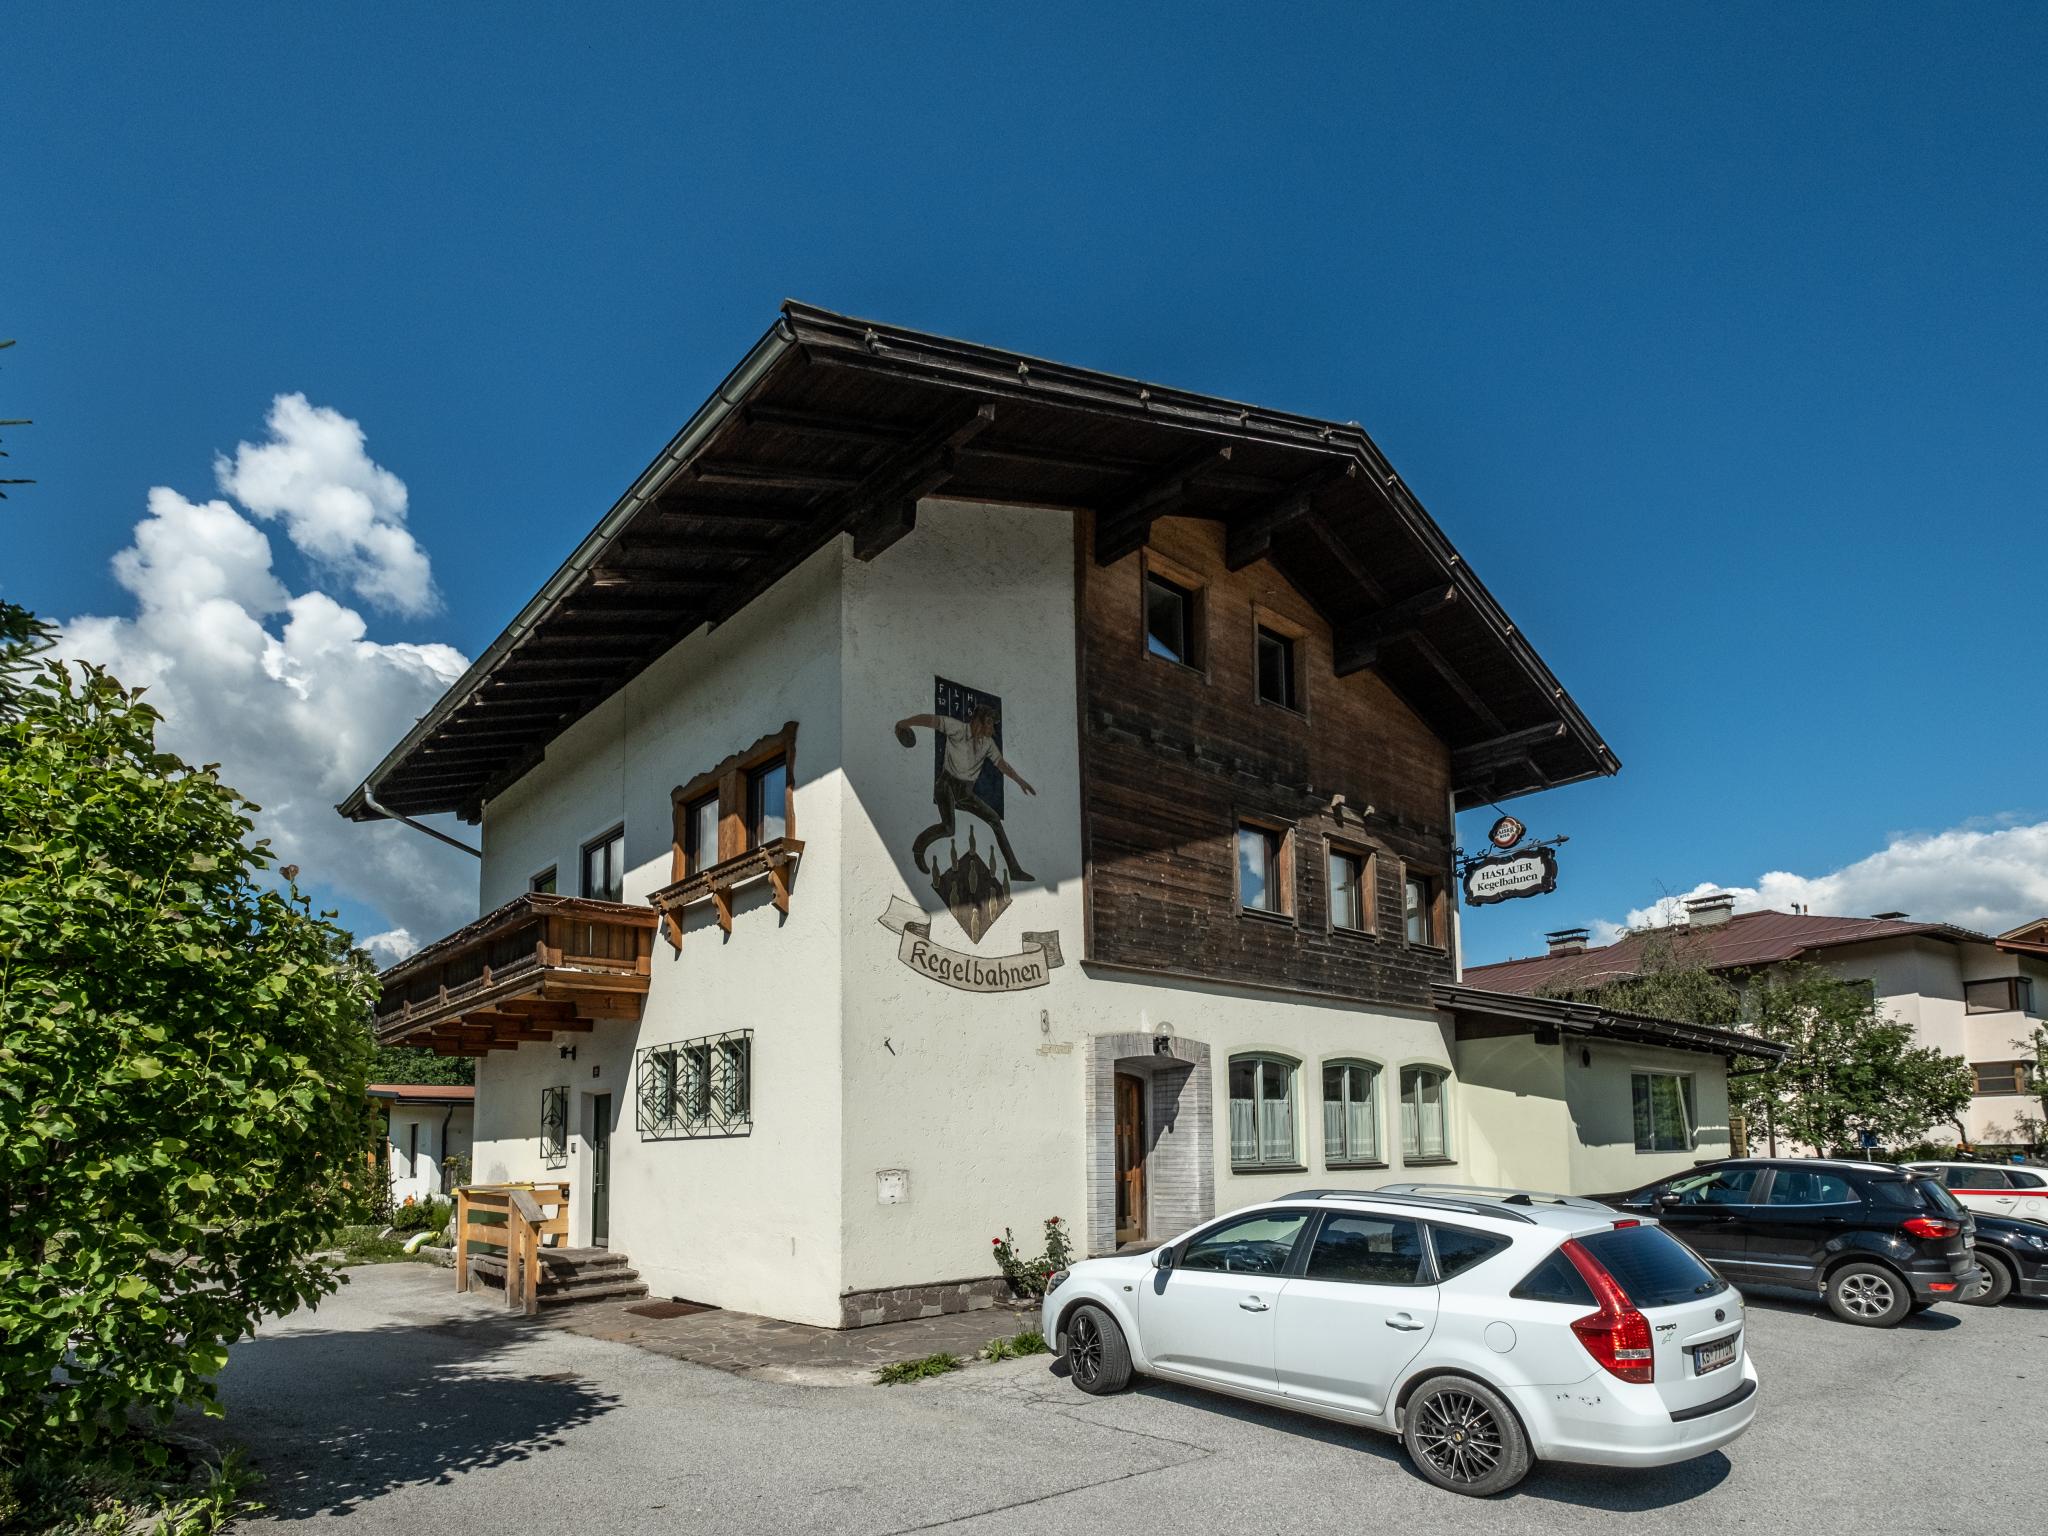 Haslau Large Tirol